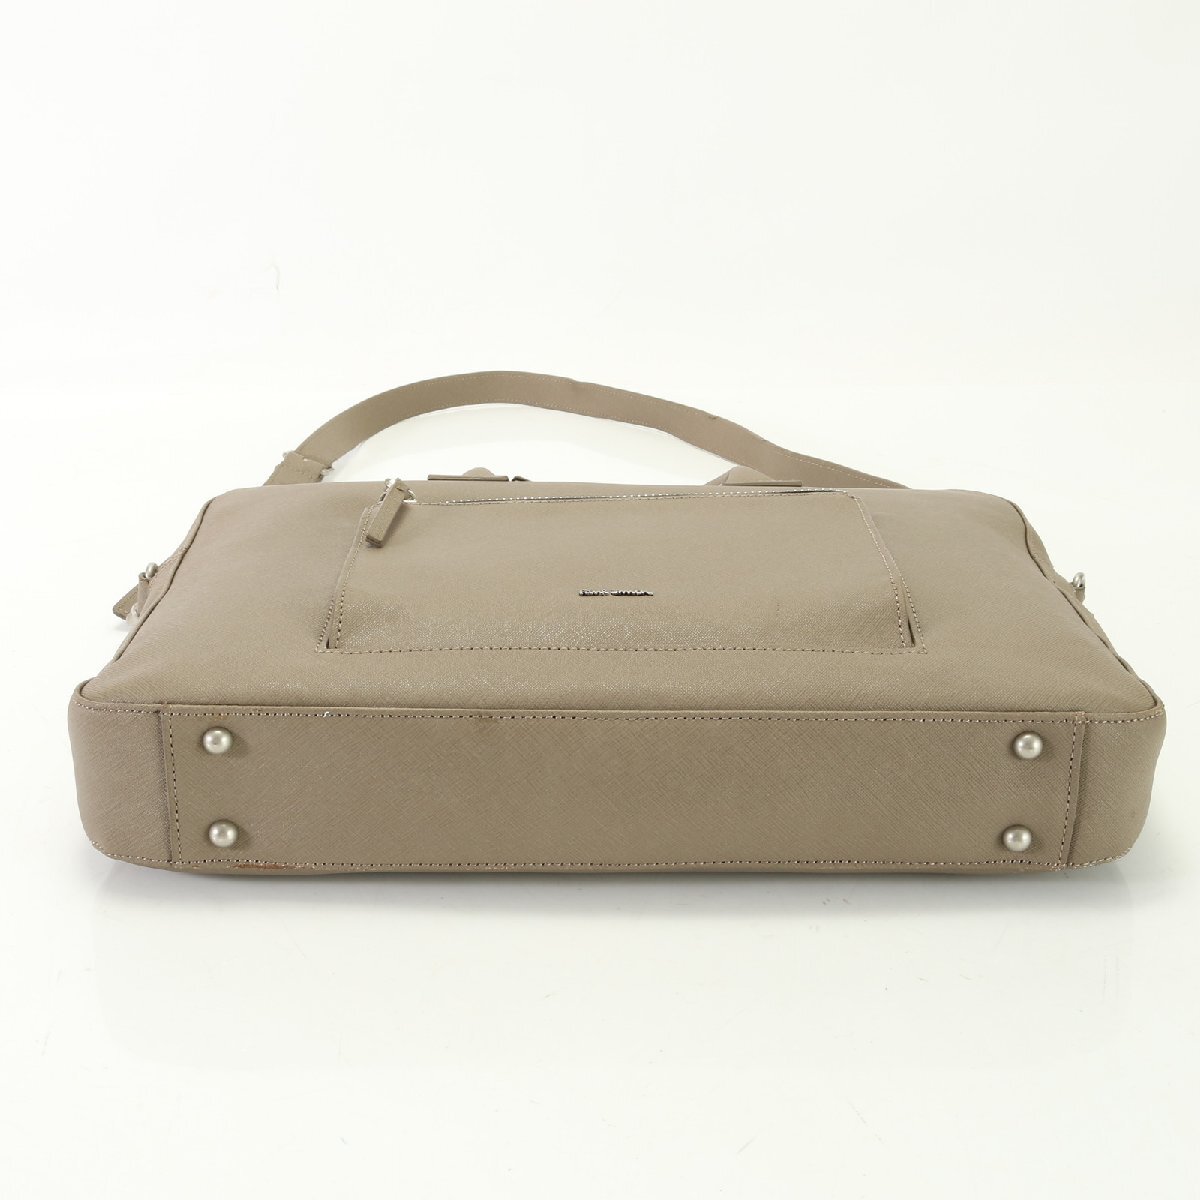 1 jpy # beautiful goods # Paul Smith #2WAY# business bag diagonal .. shoulder document bag briefcase tote bag commuting popular A4 men's EJT 1106-E14